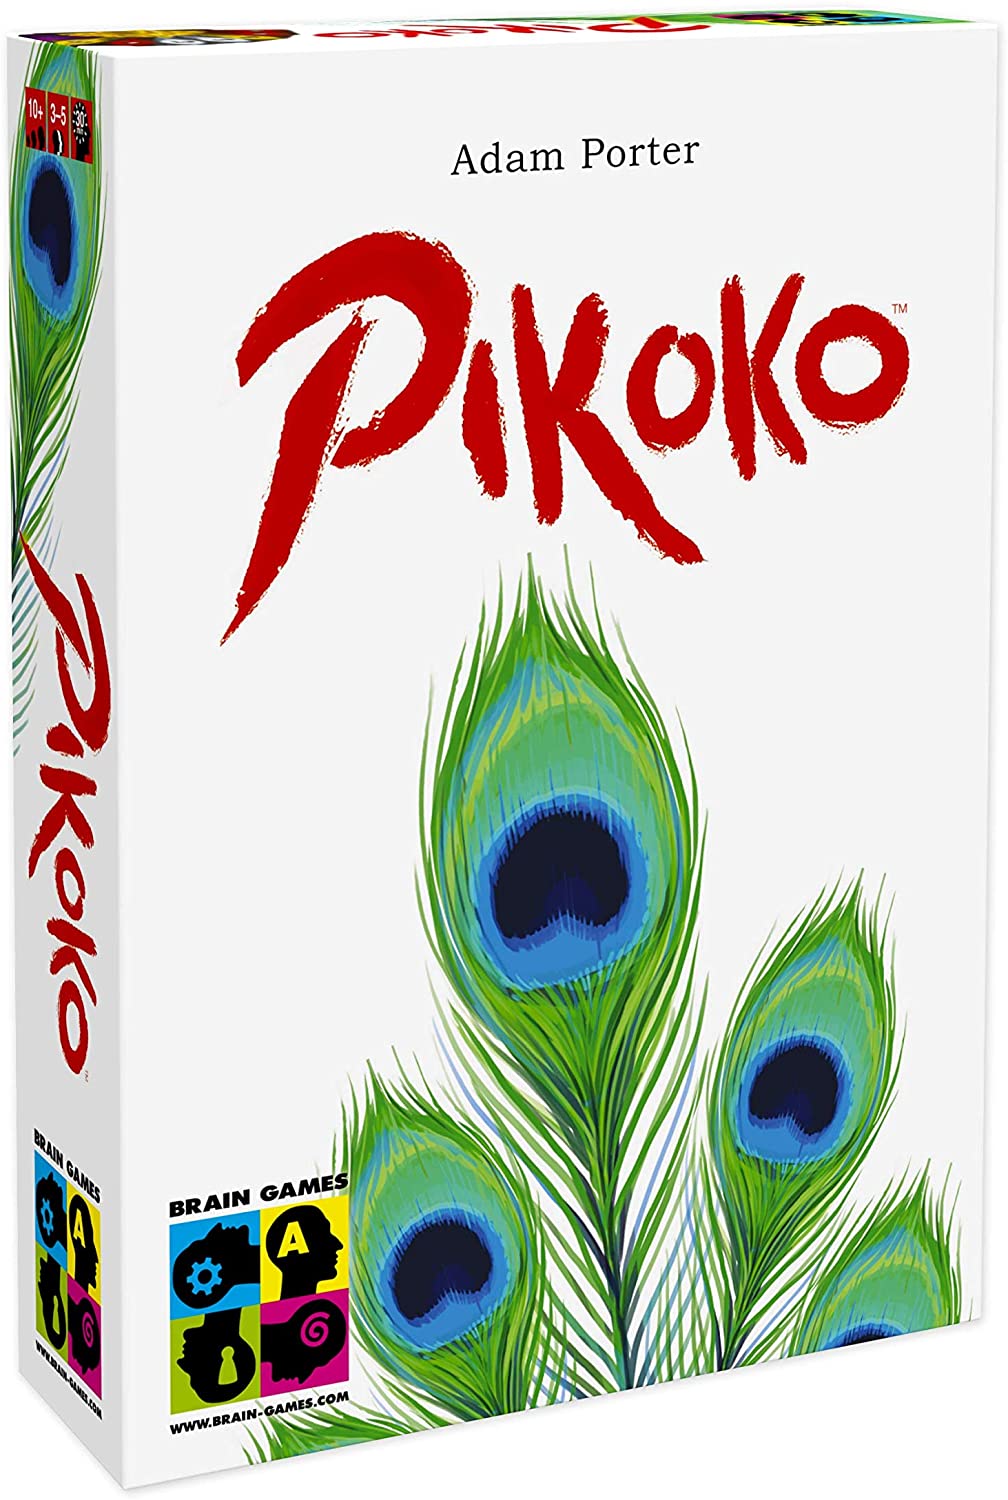 Pikoko Brain Games